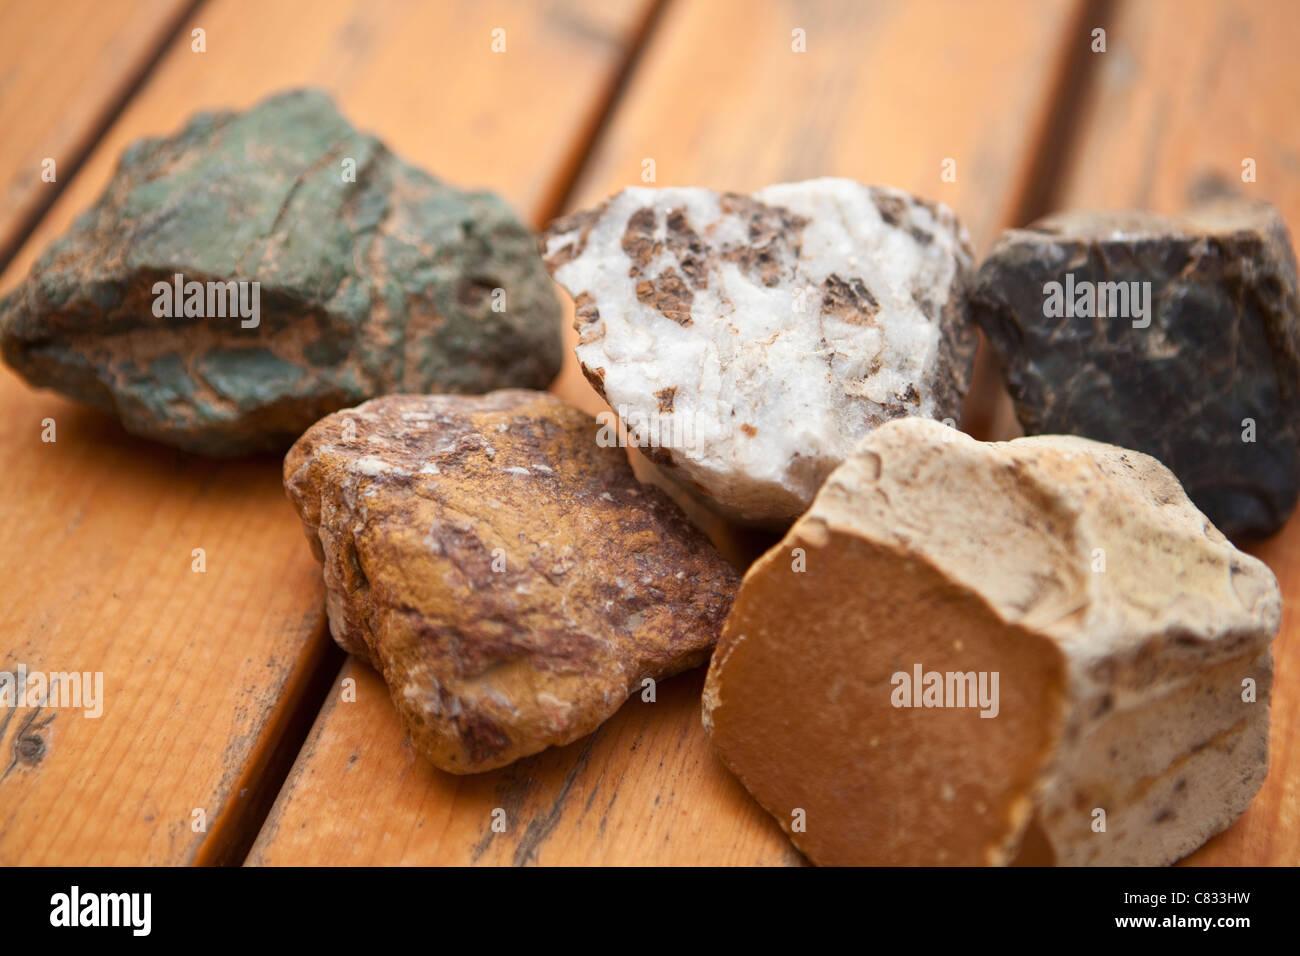 different rocks and minerals comprise the soils of Babcock Vineyard, Santa Rita Hills, Santa Ynez Valley, California Stock Photo